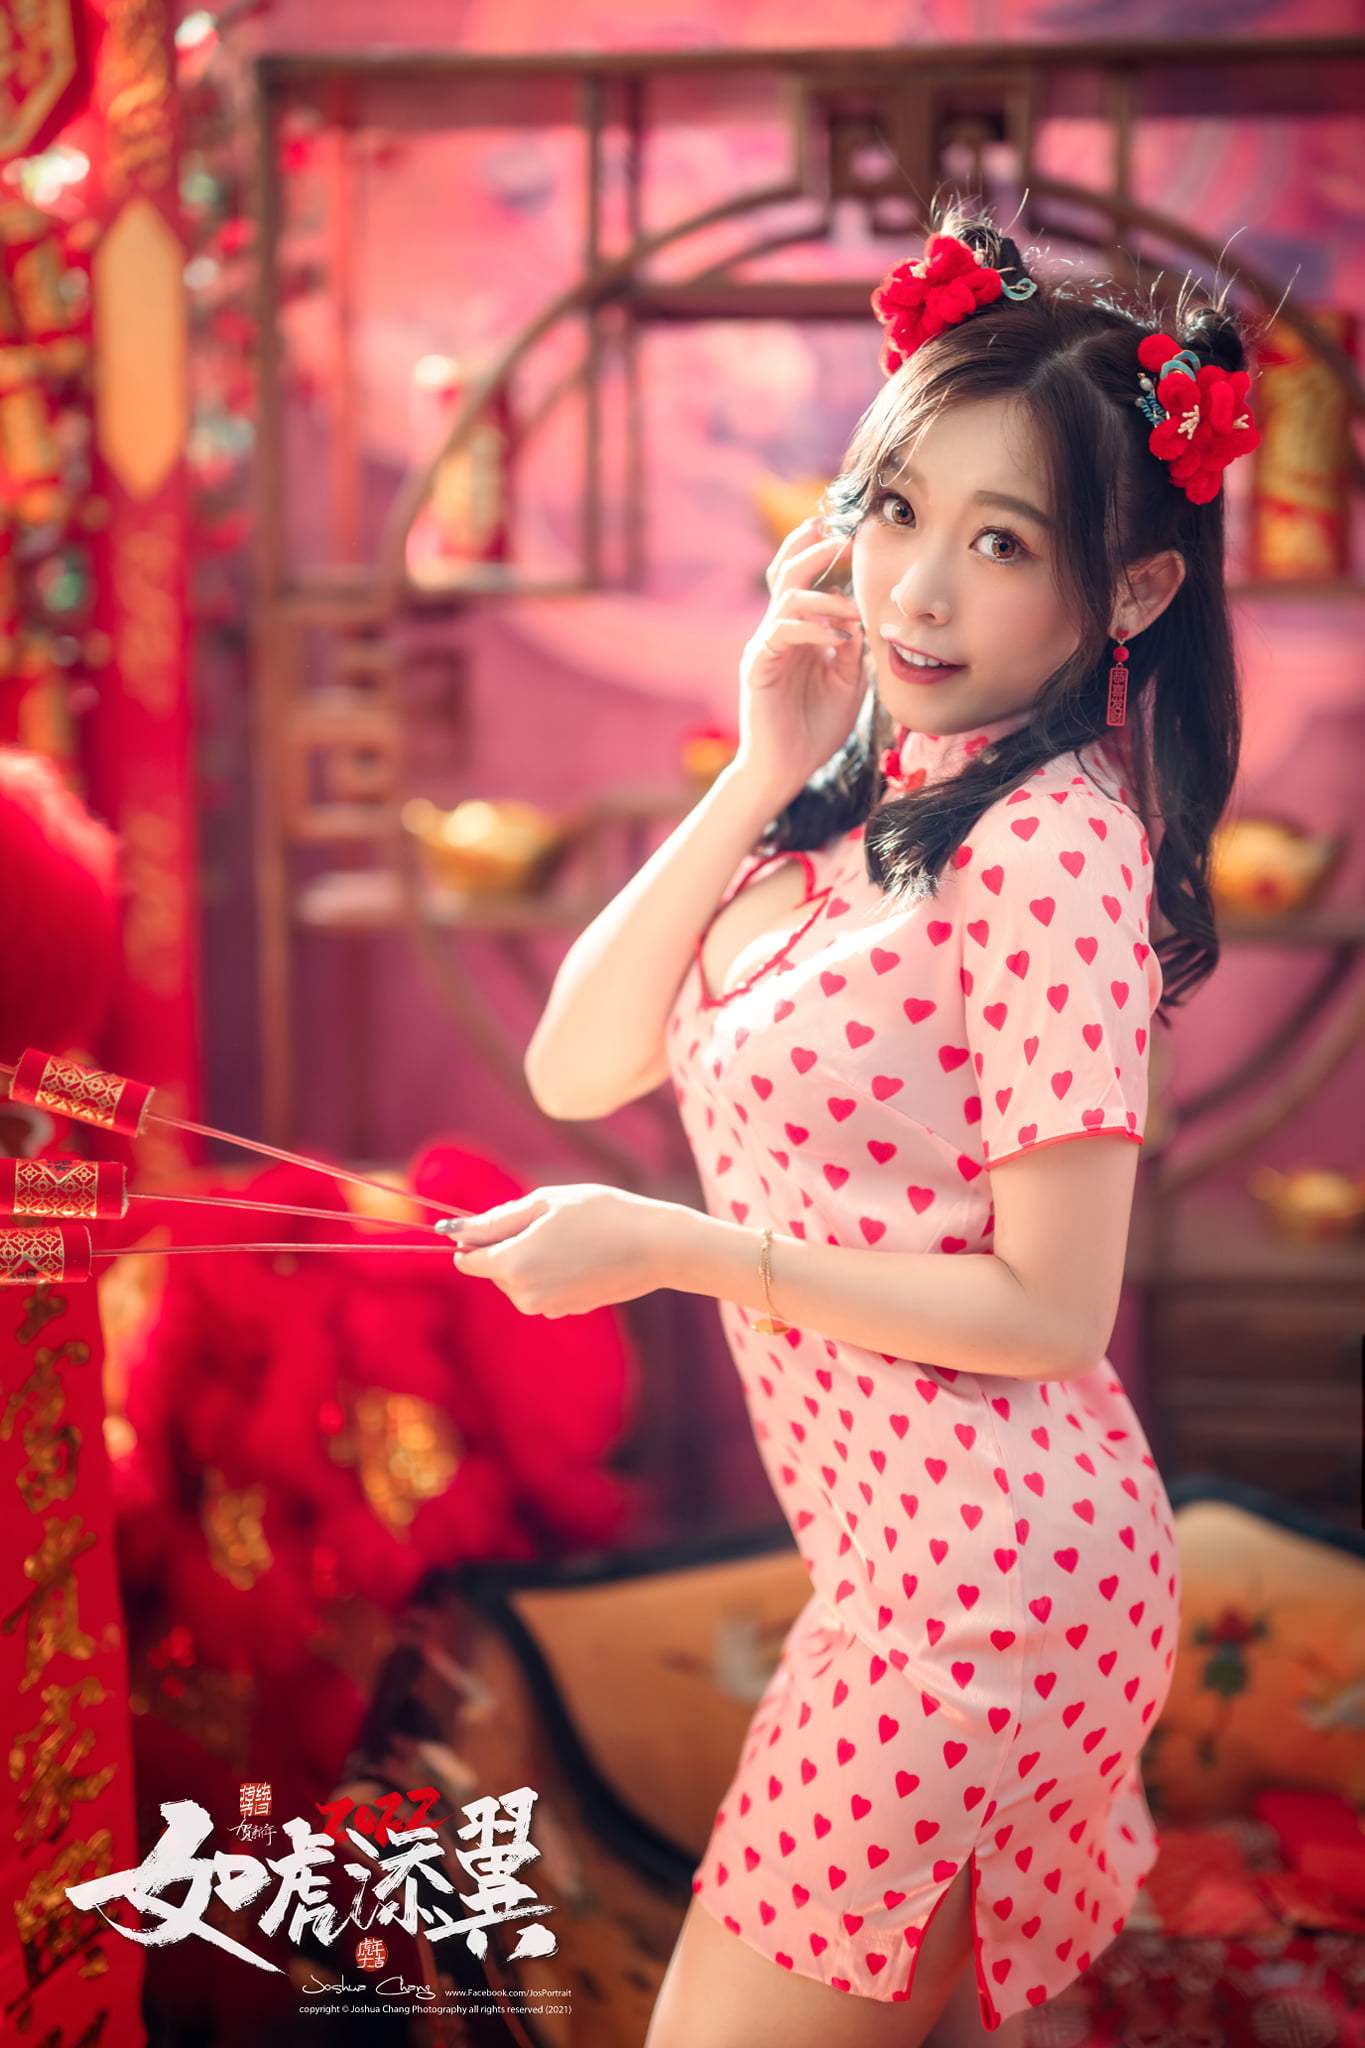 Polka Dots Dress Asian Women Oriental Long Hair Brunette Red Touching Face Joshua Chang Looking At V 1365x2048